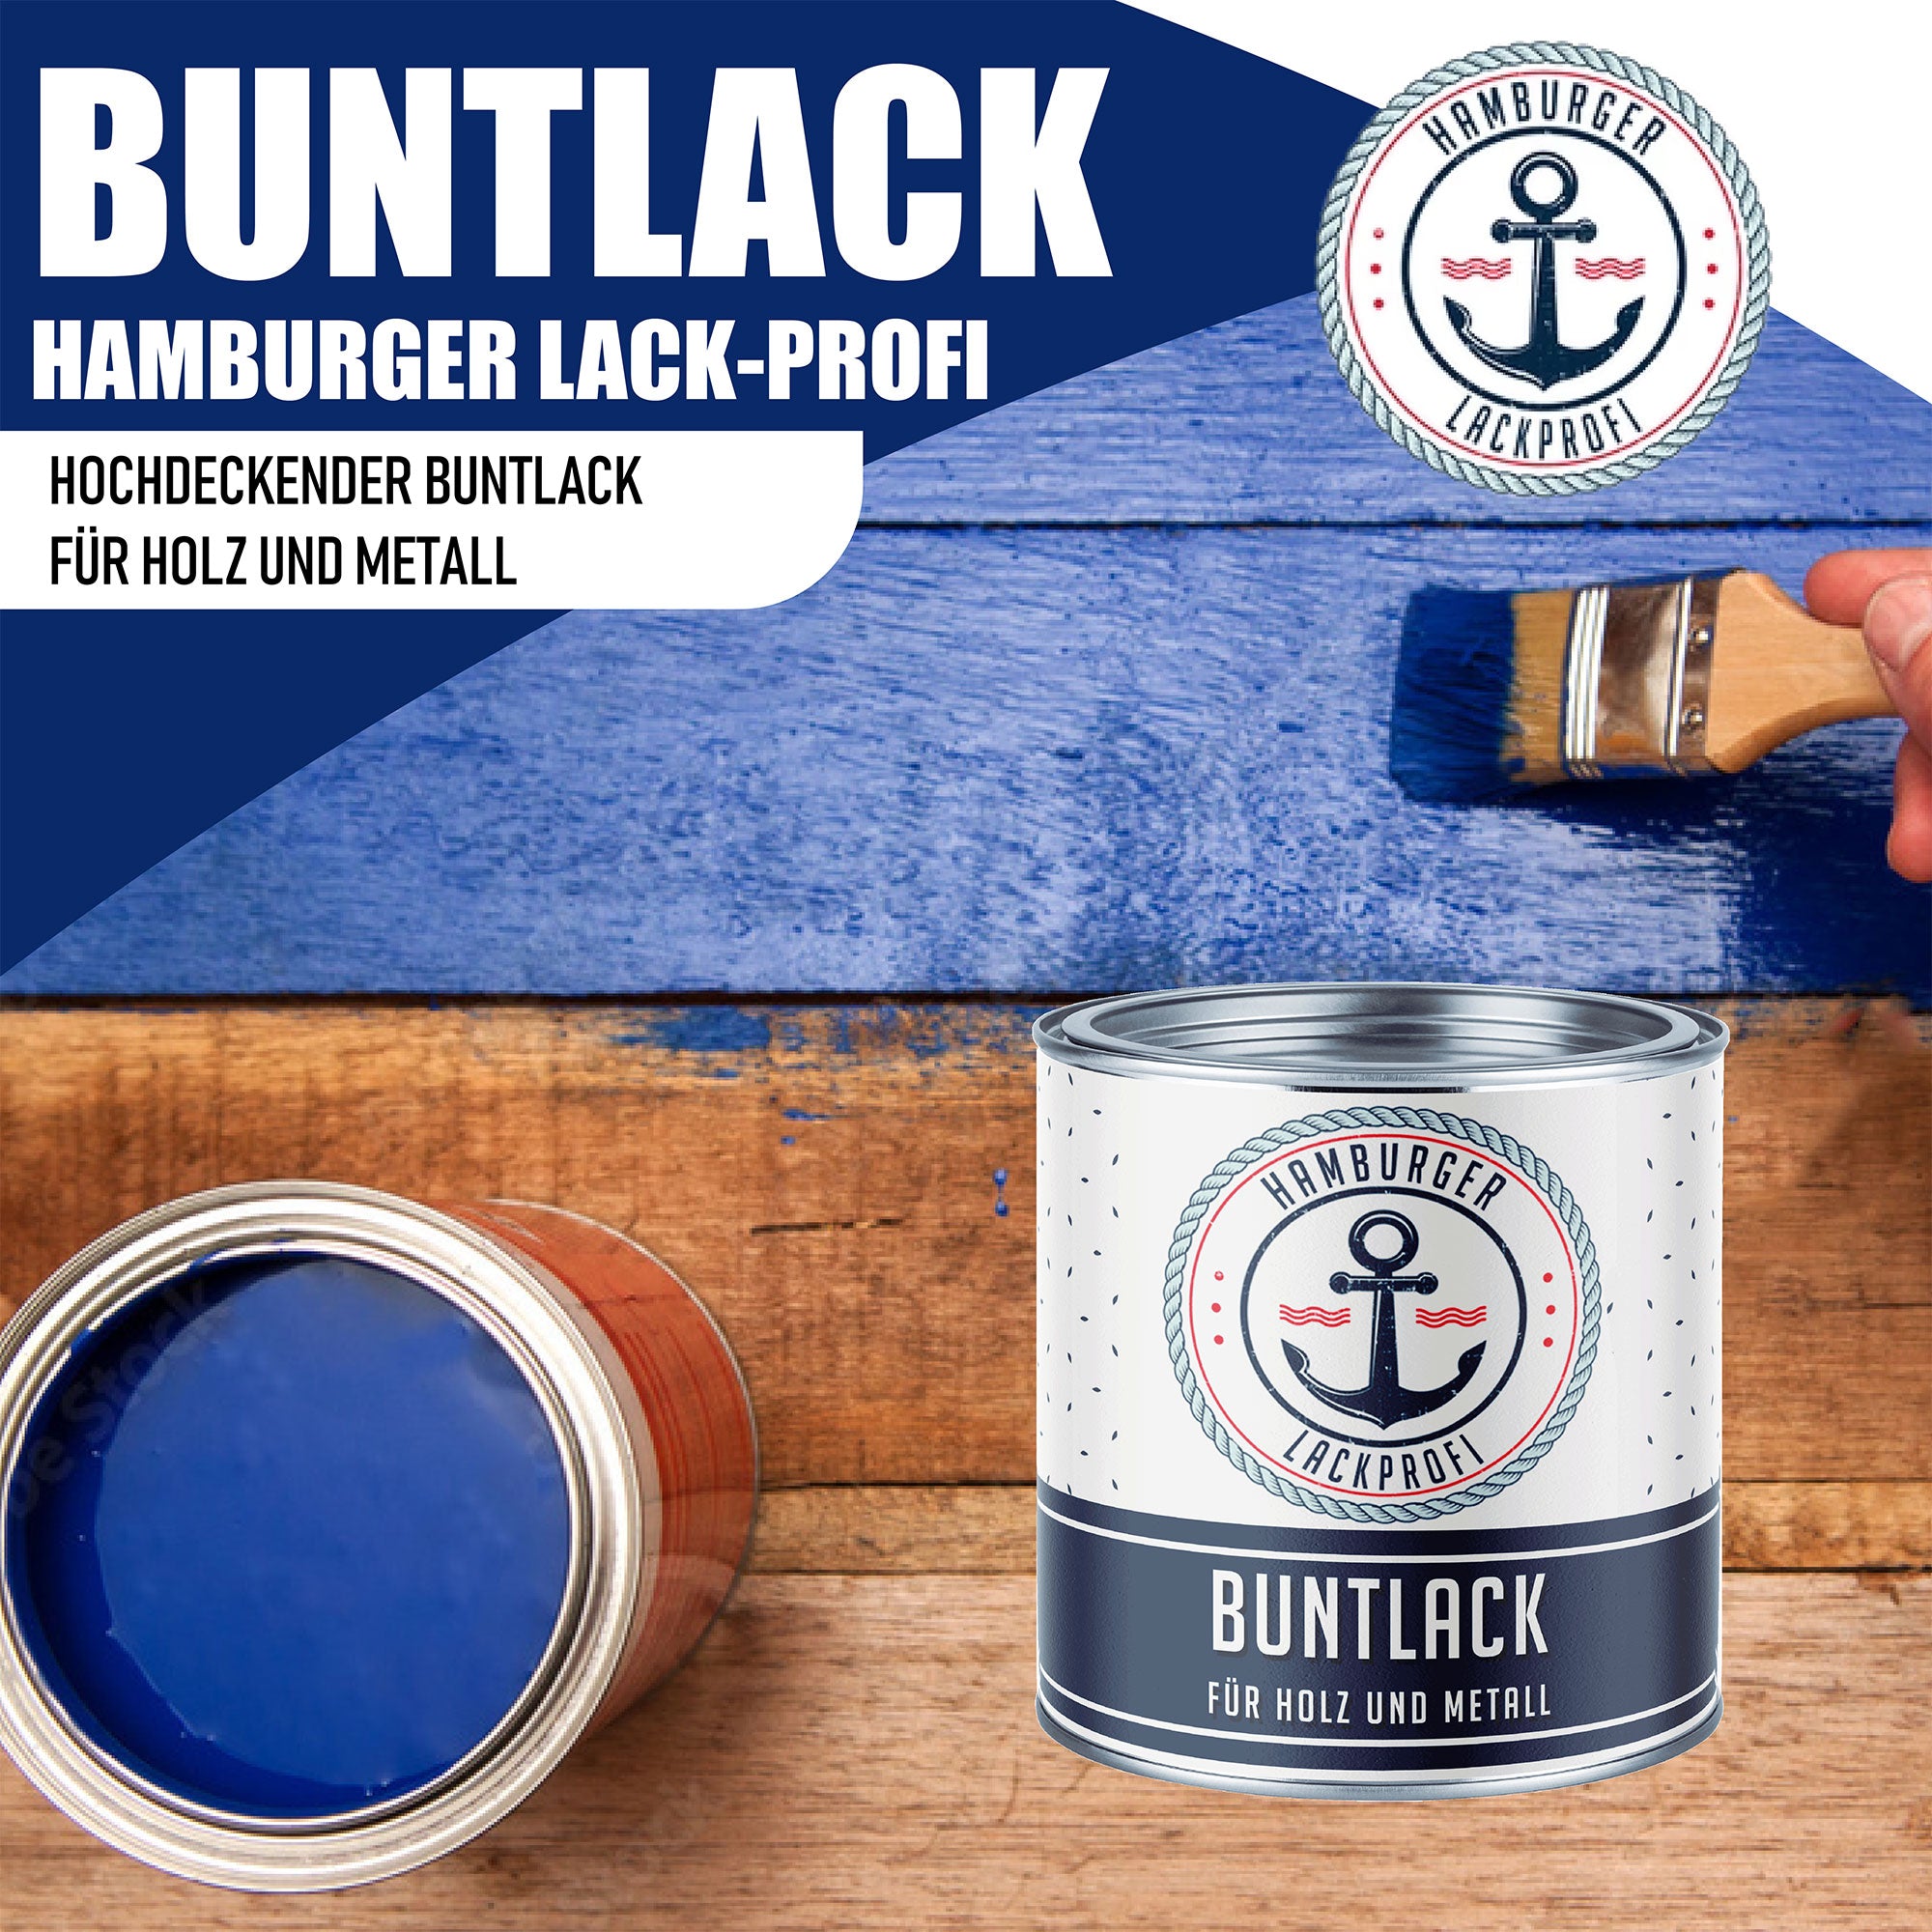 Hamburger Lack-Profi Buntlack Betongrau RAL 7023 - Robuster Kunstharzlack